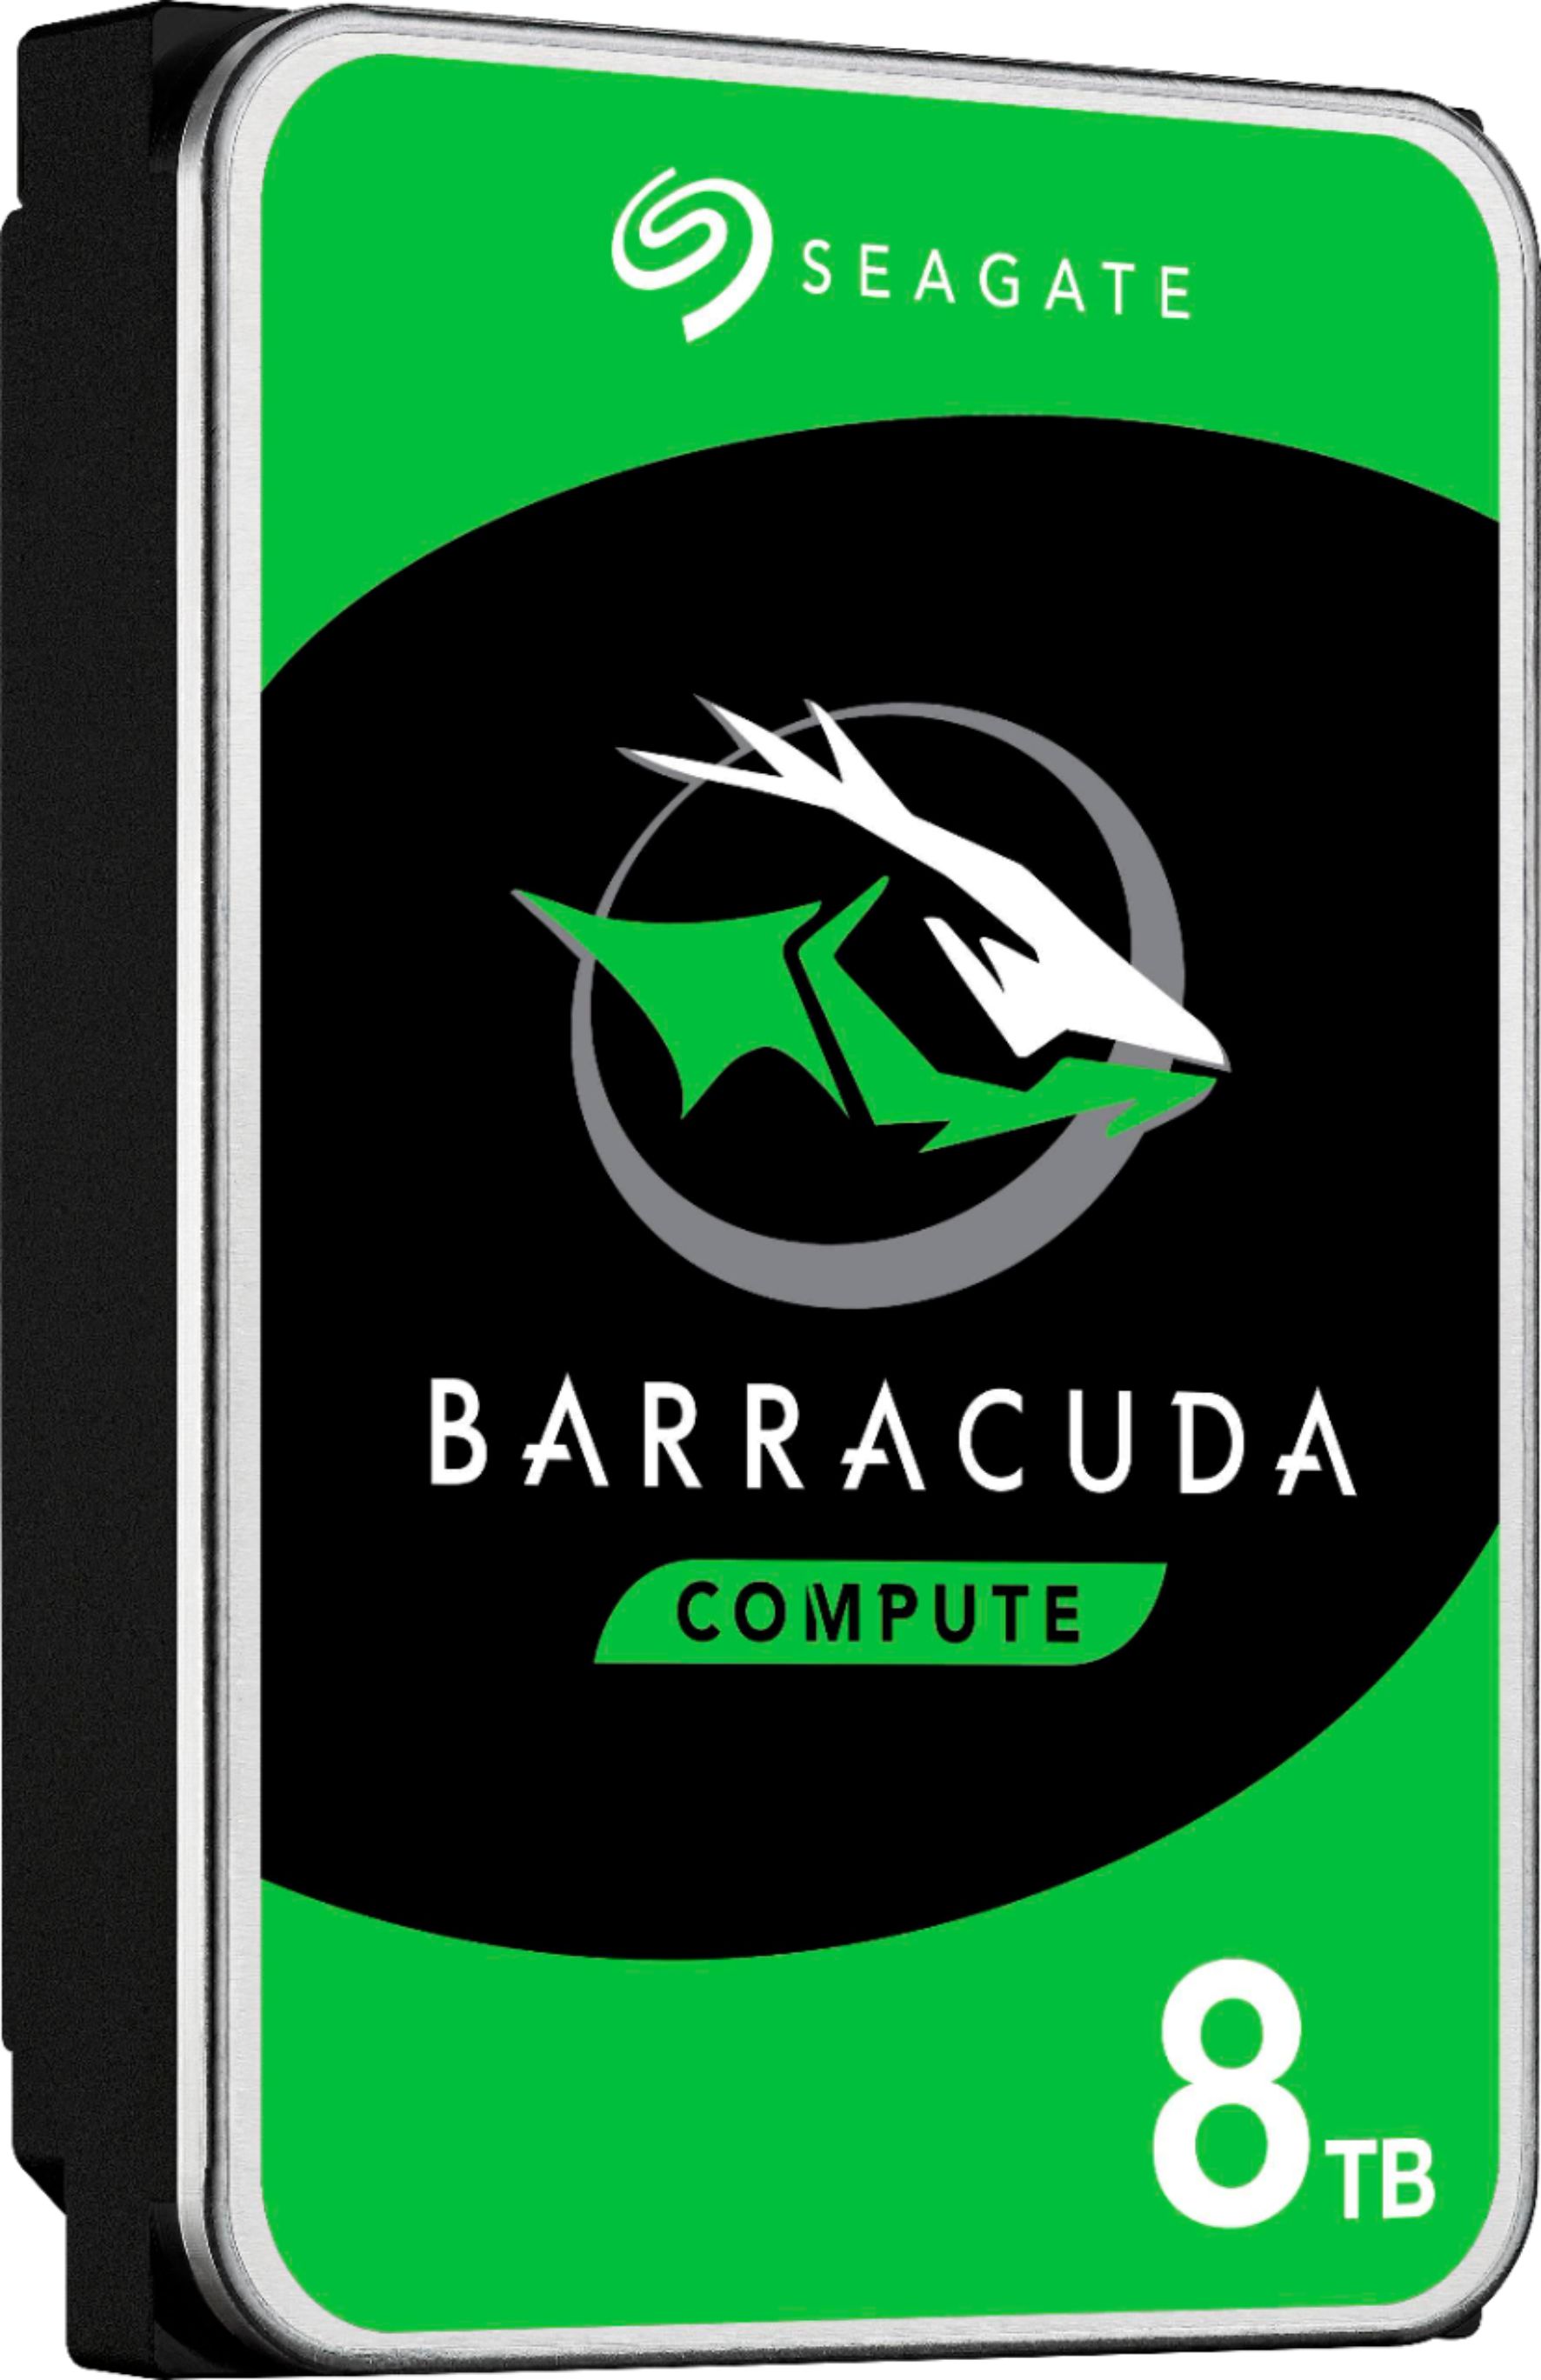 Angle View: Seagate - Barracuda 8TB Internal SATA Hard Drive for Desktops